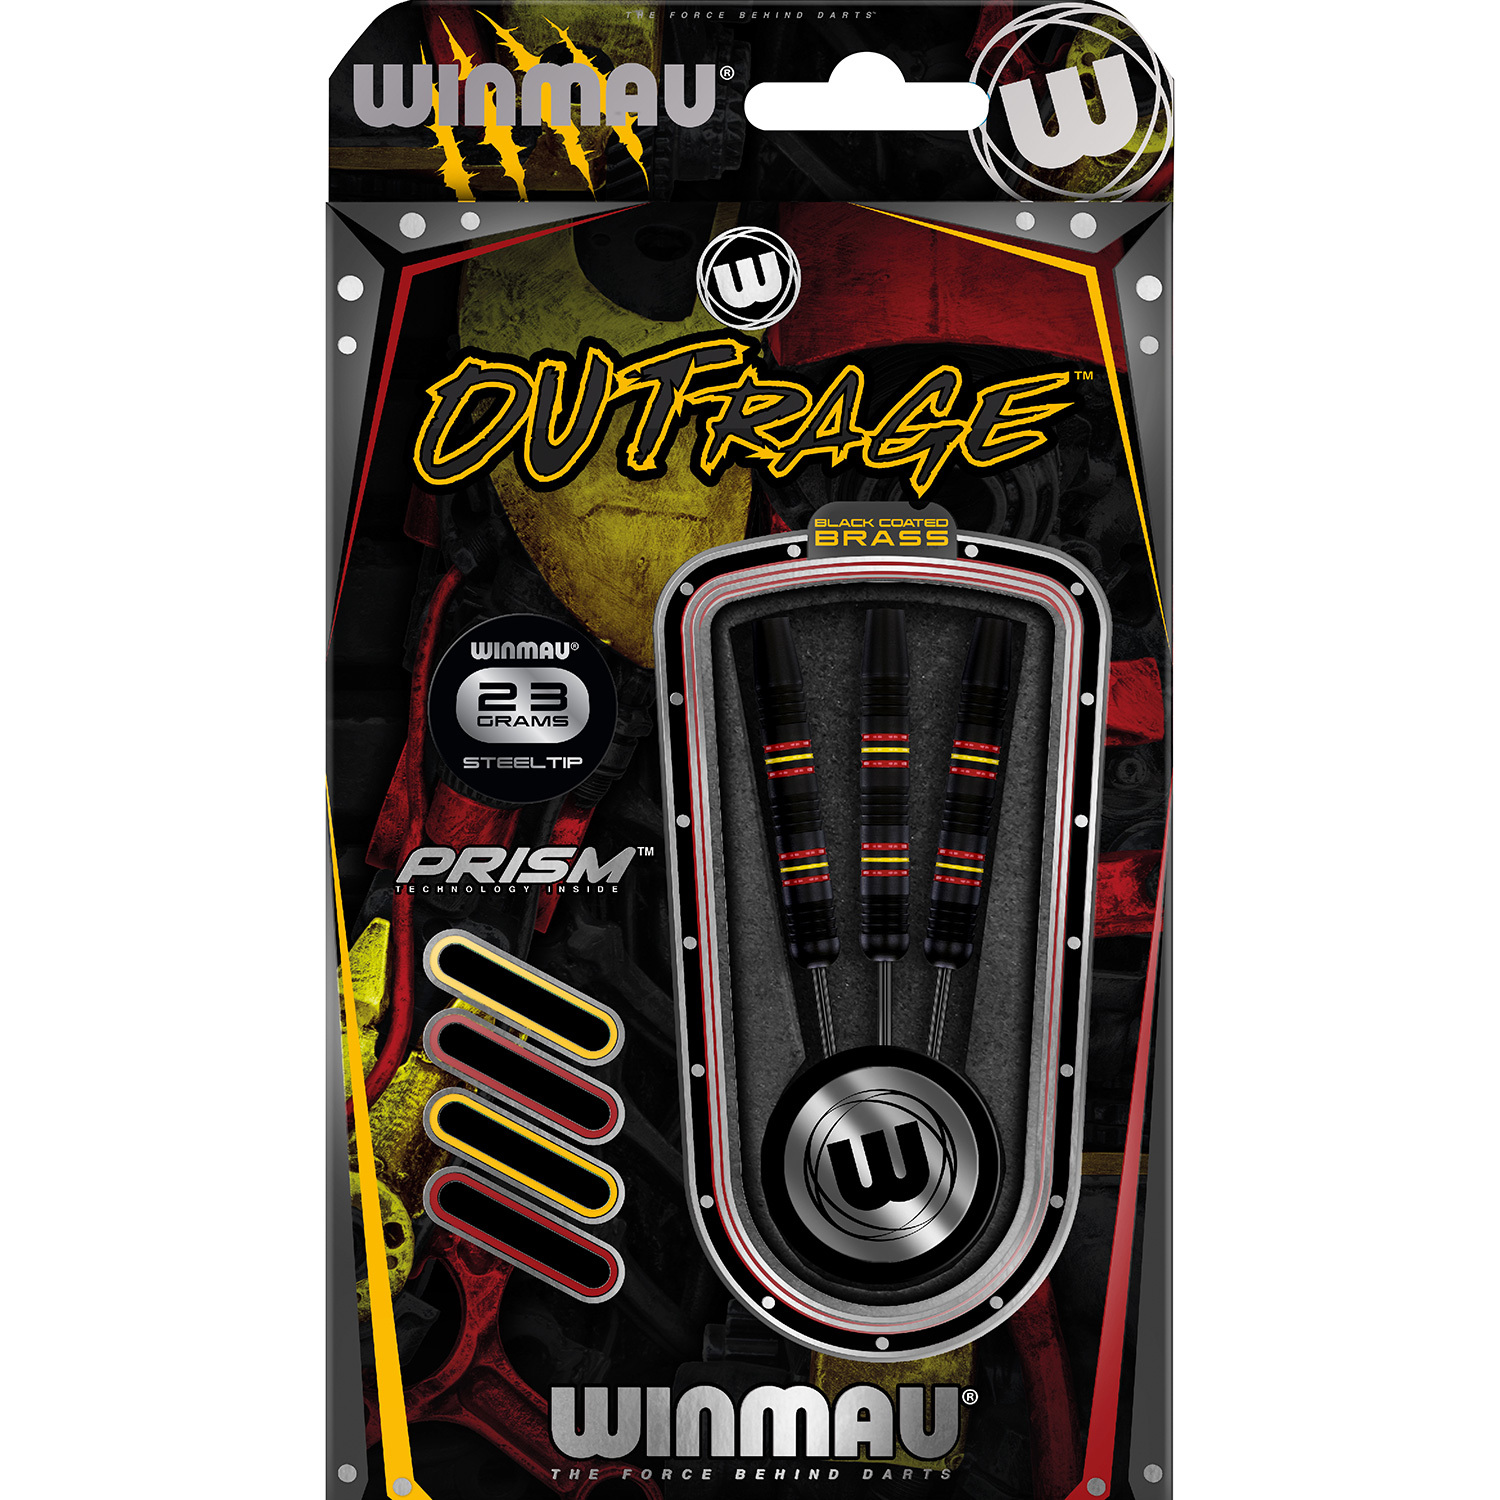 WINMAU Winmau Outrage steeltip darts Brass 23gr